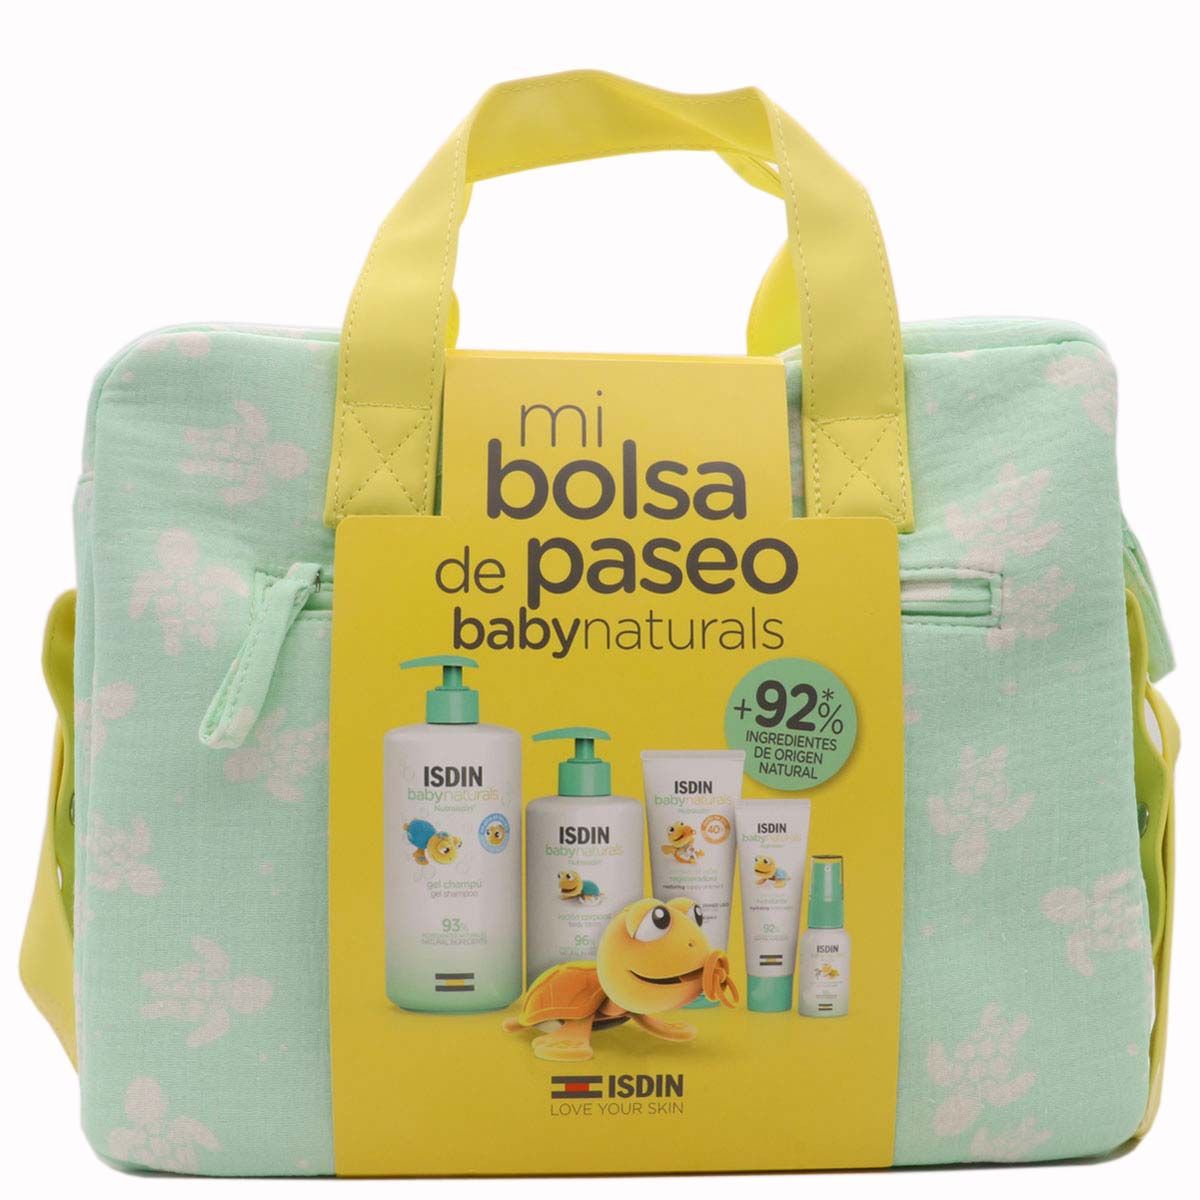 ISDIN Baby Naturals Bolsa de Paseo - Parafarmacia Santa Nonia